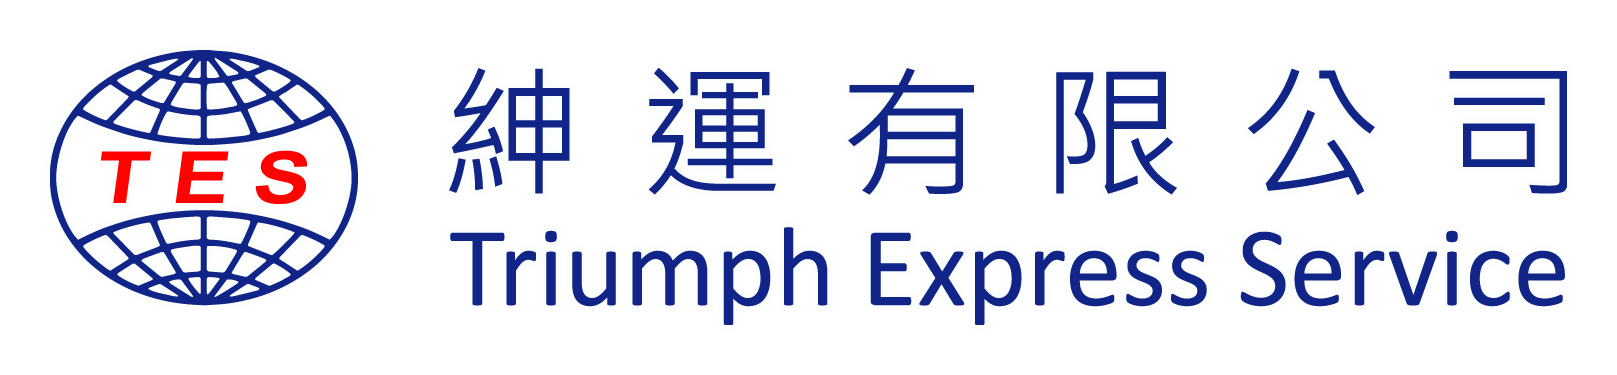 Triumph Express Service